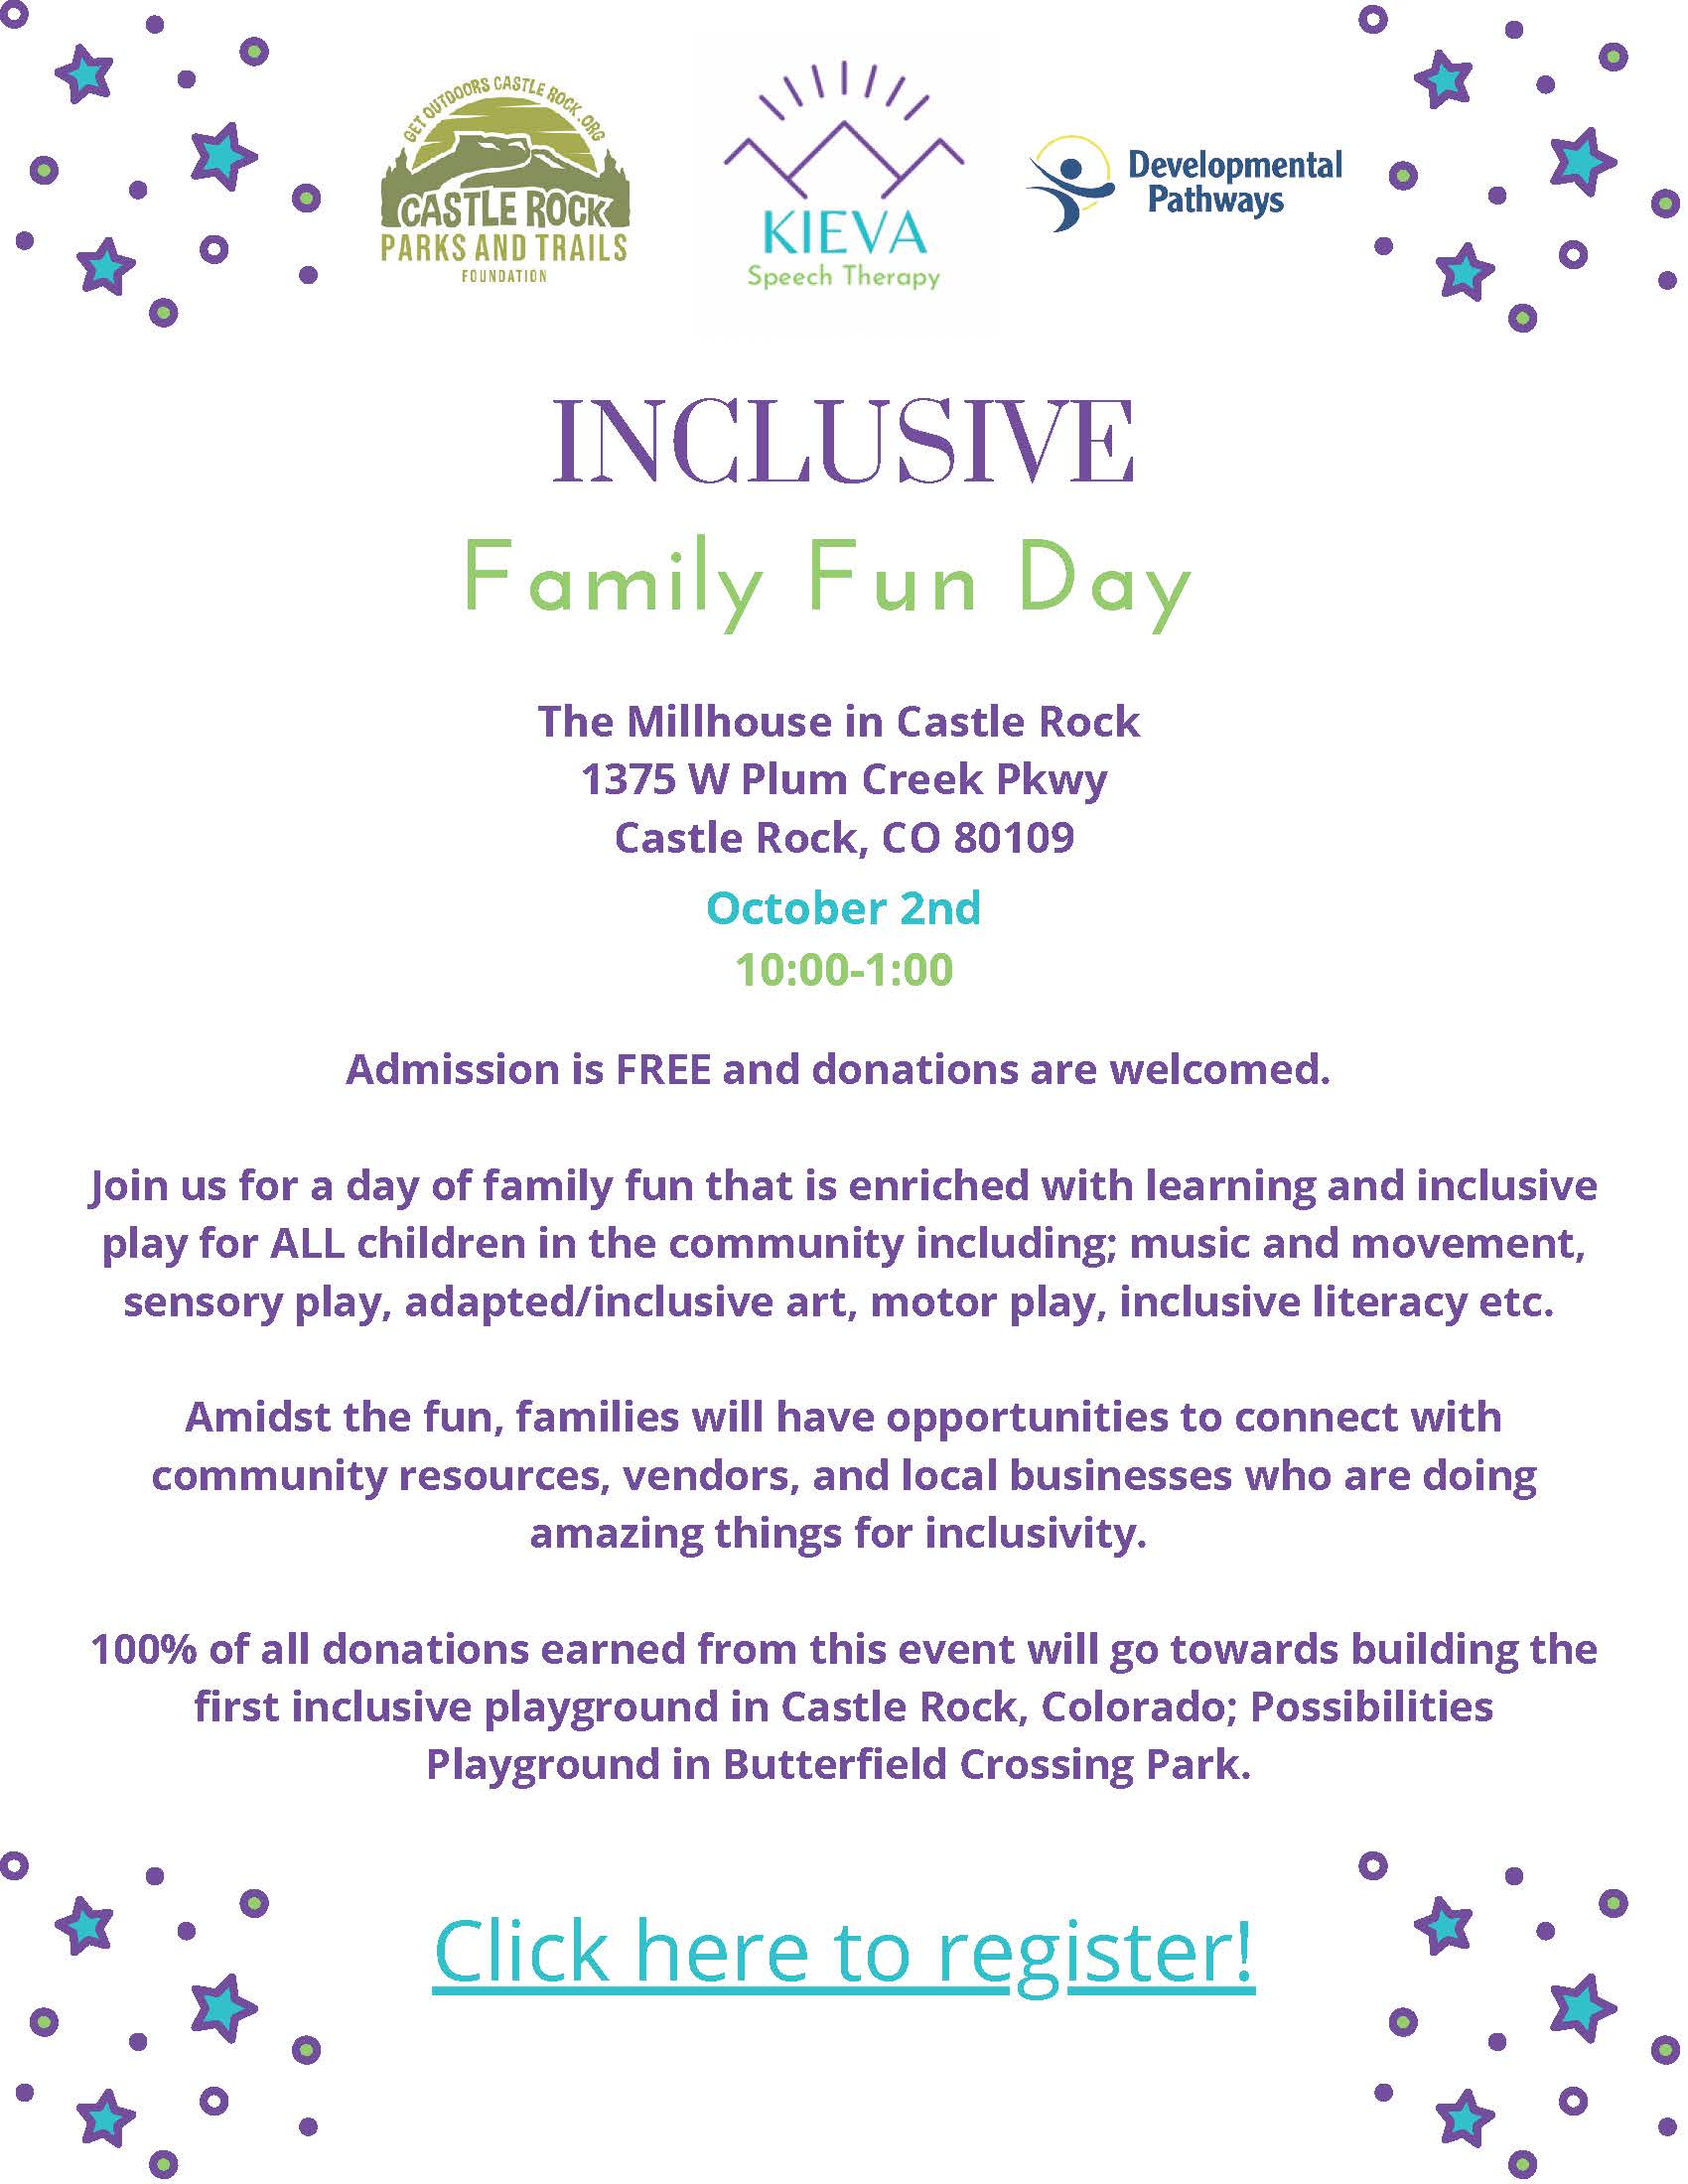 Inclusive Family Fun Day flyer